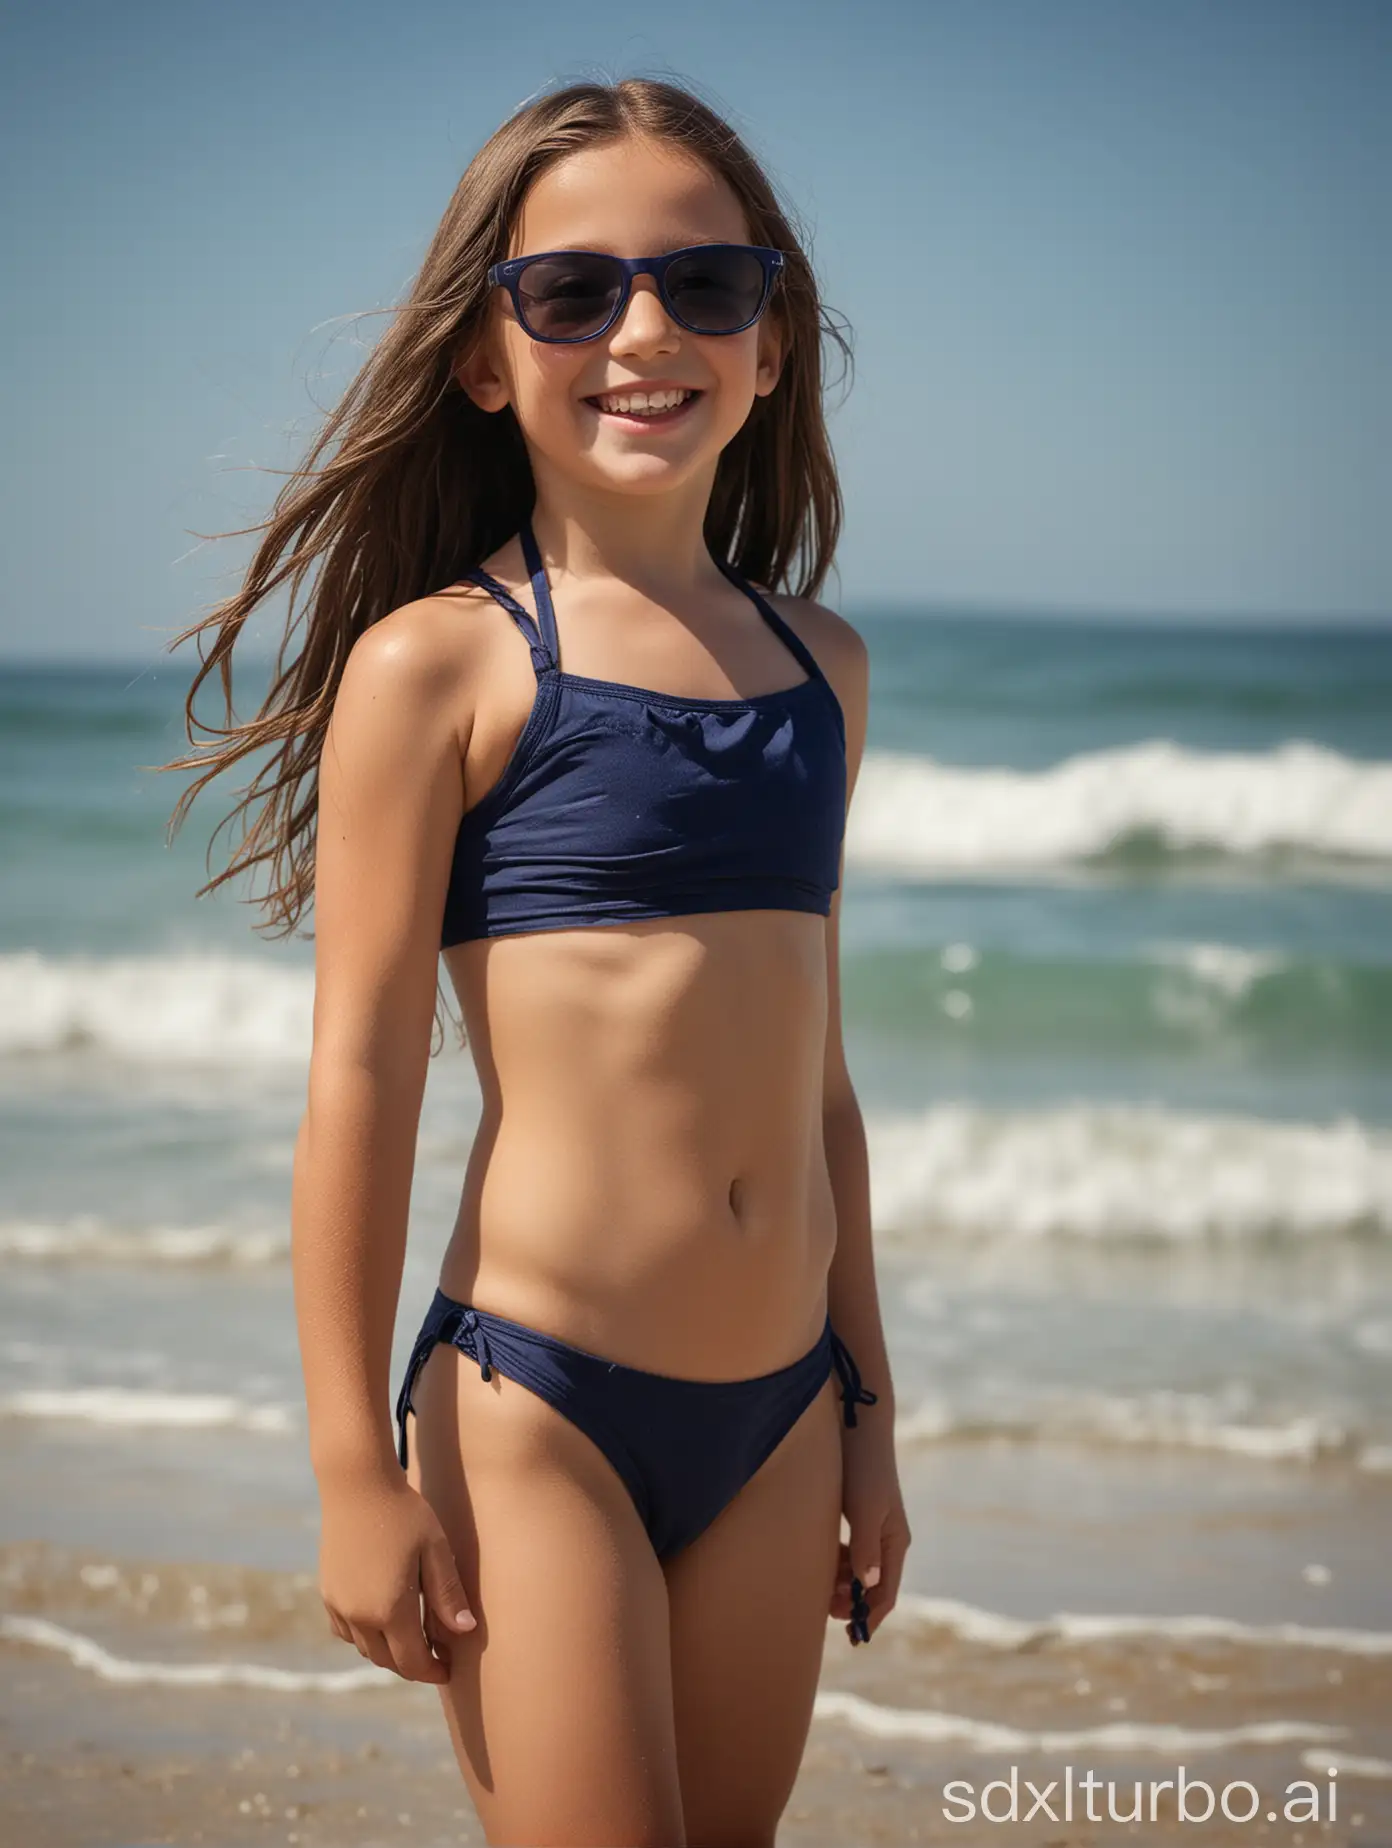 Joyful-9YearOld-Girl-Enjoying-Summer-at-the-Beach